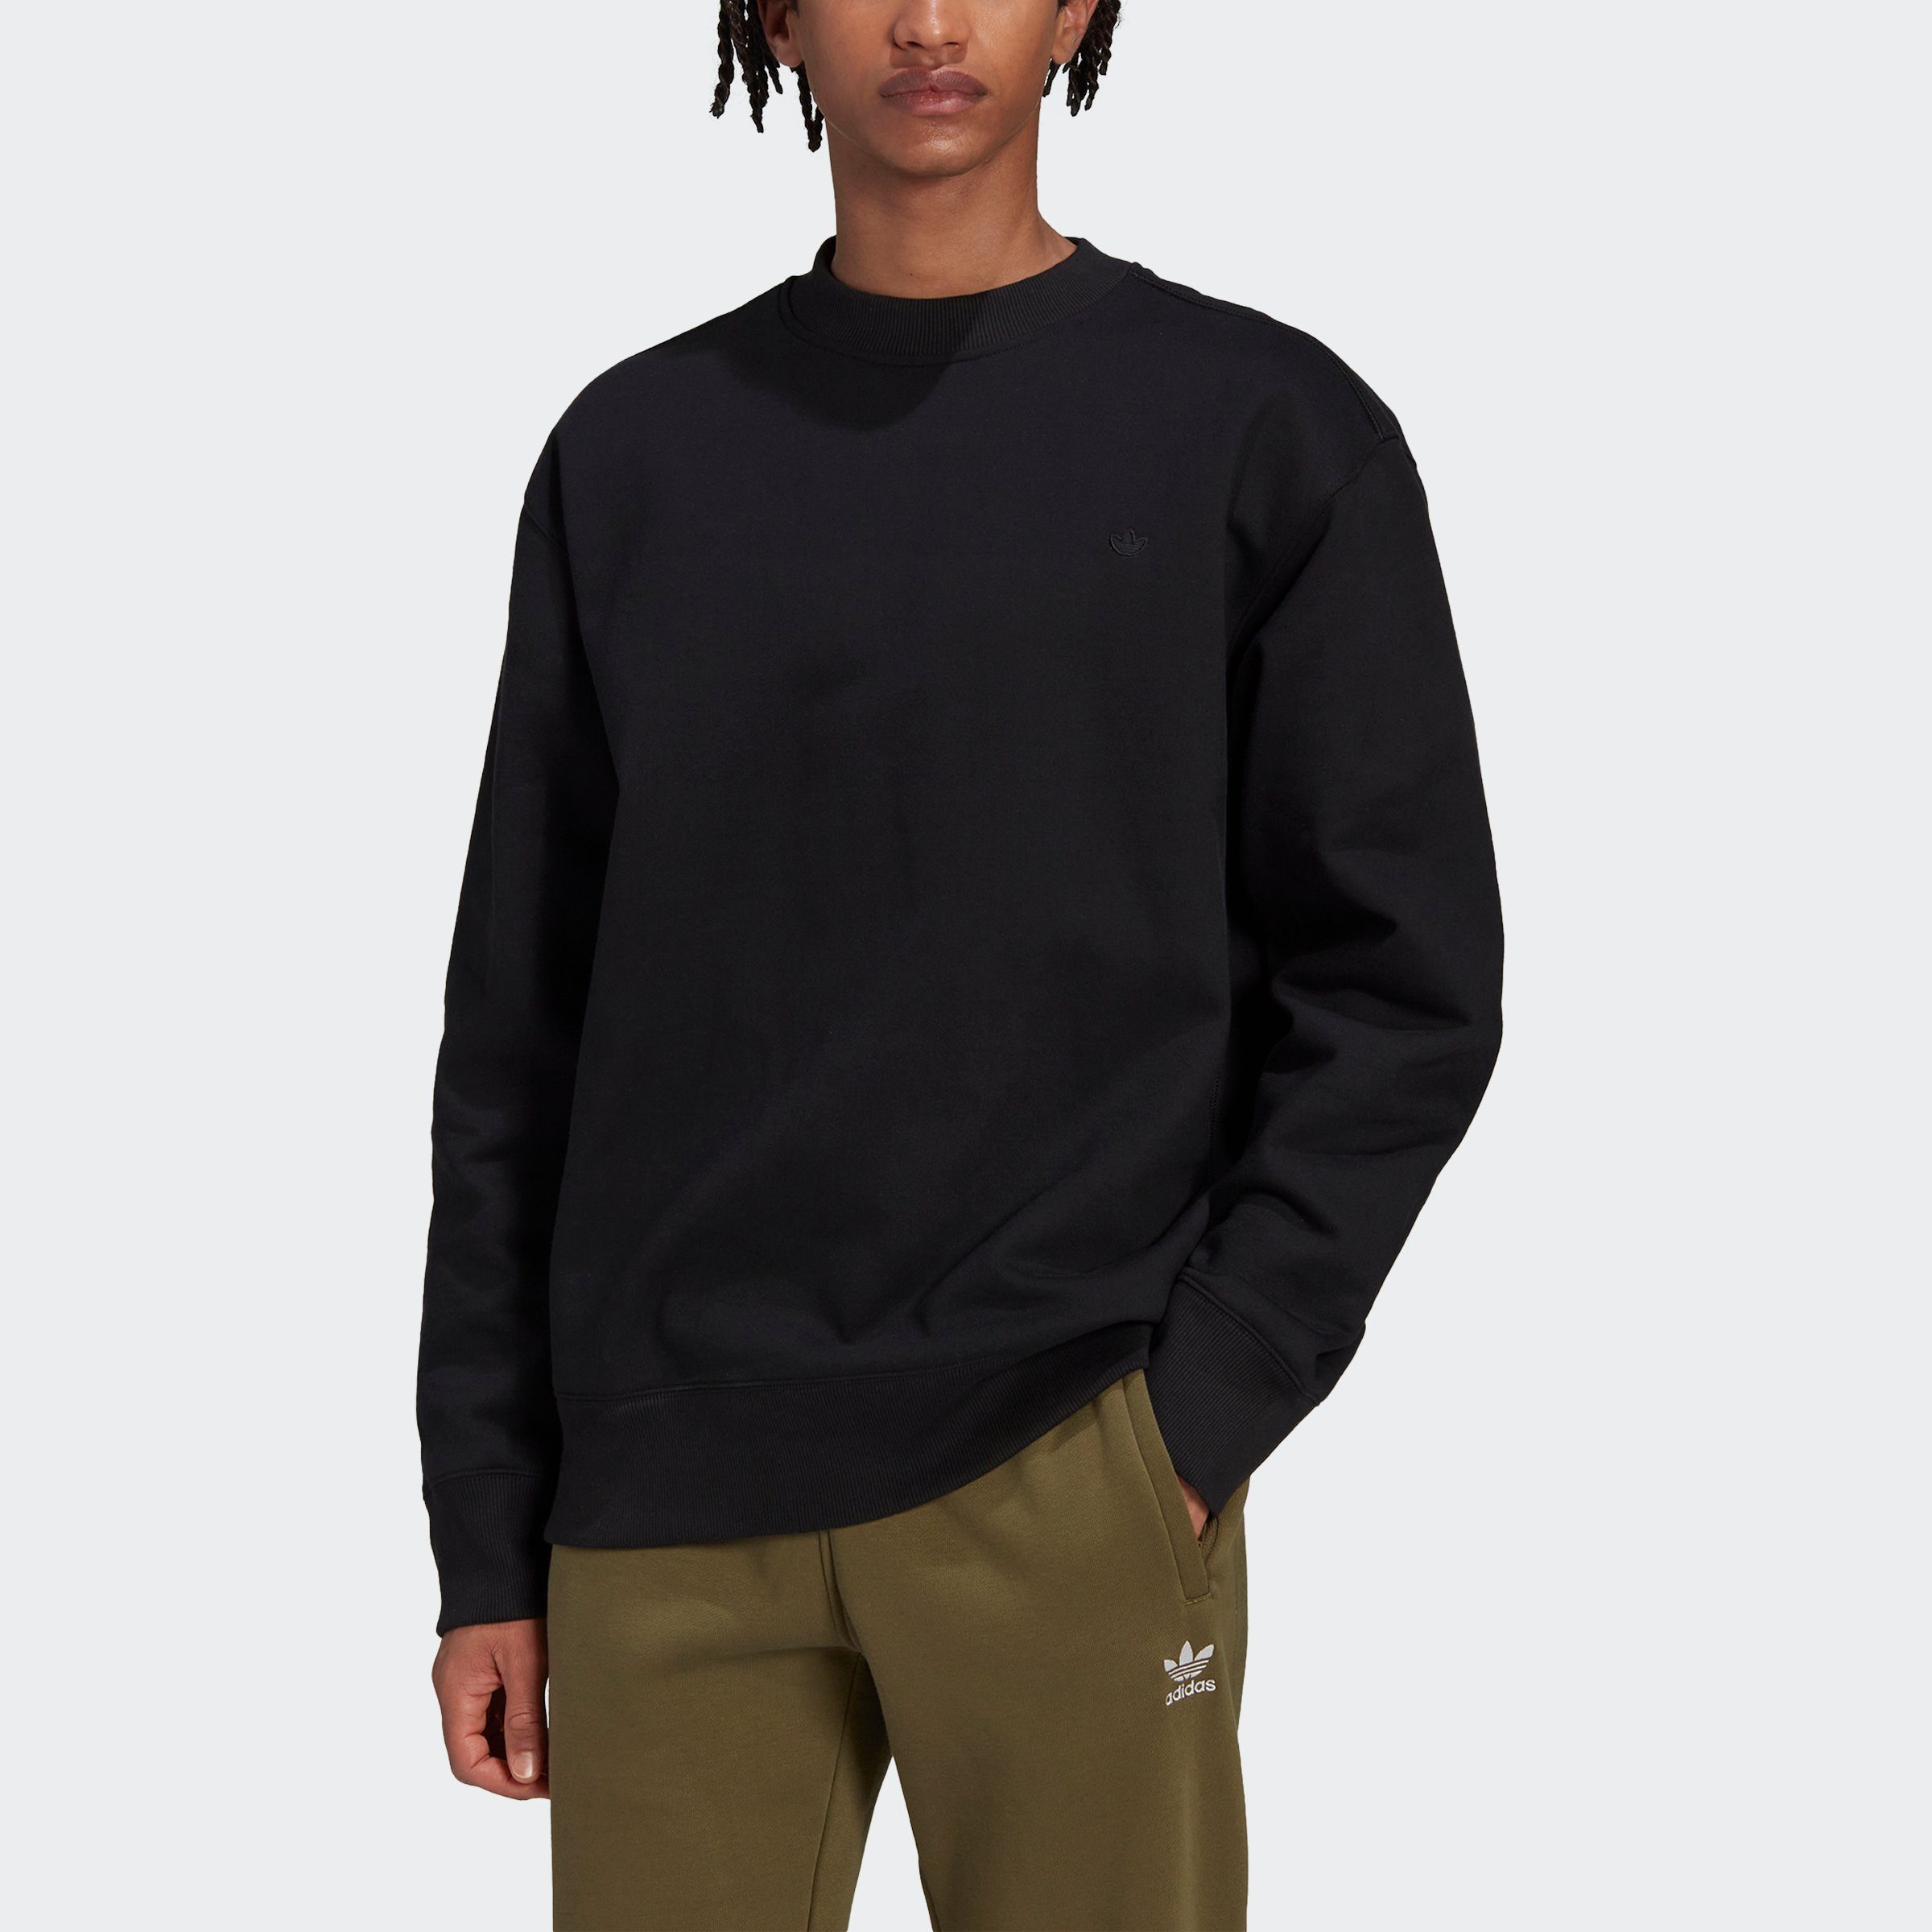 Polyester C Originals adidas Sweatshirt Crew, % Baumwolle recycelter 83 % / 17 (Fleece)